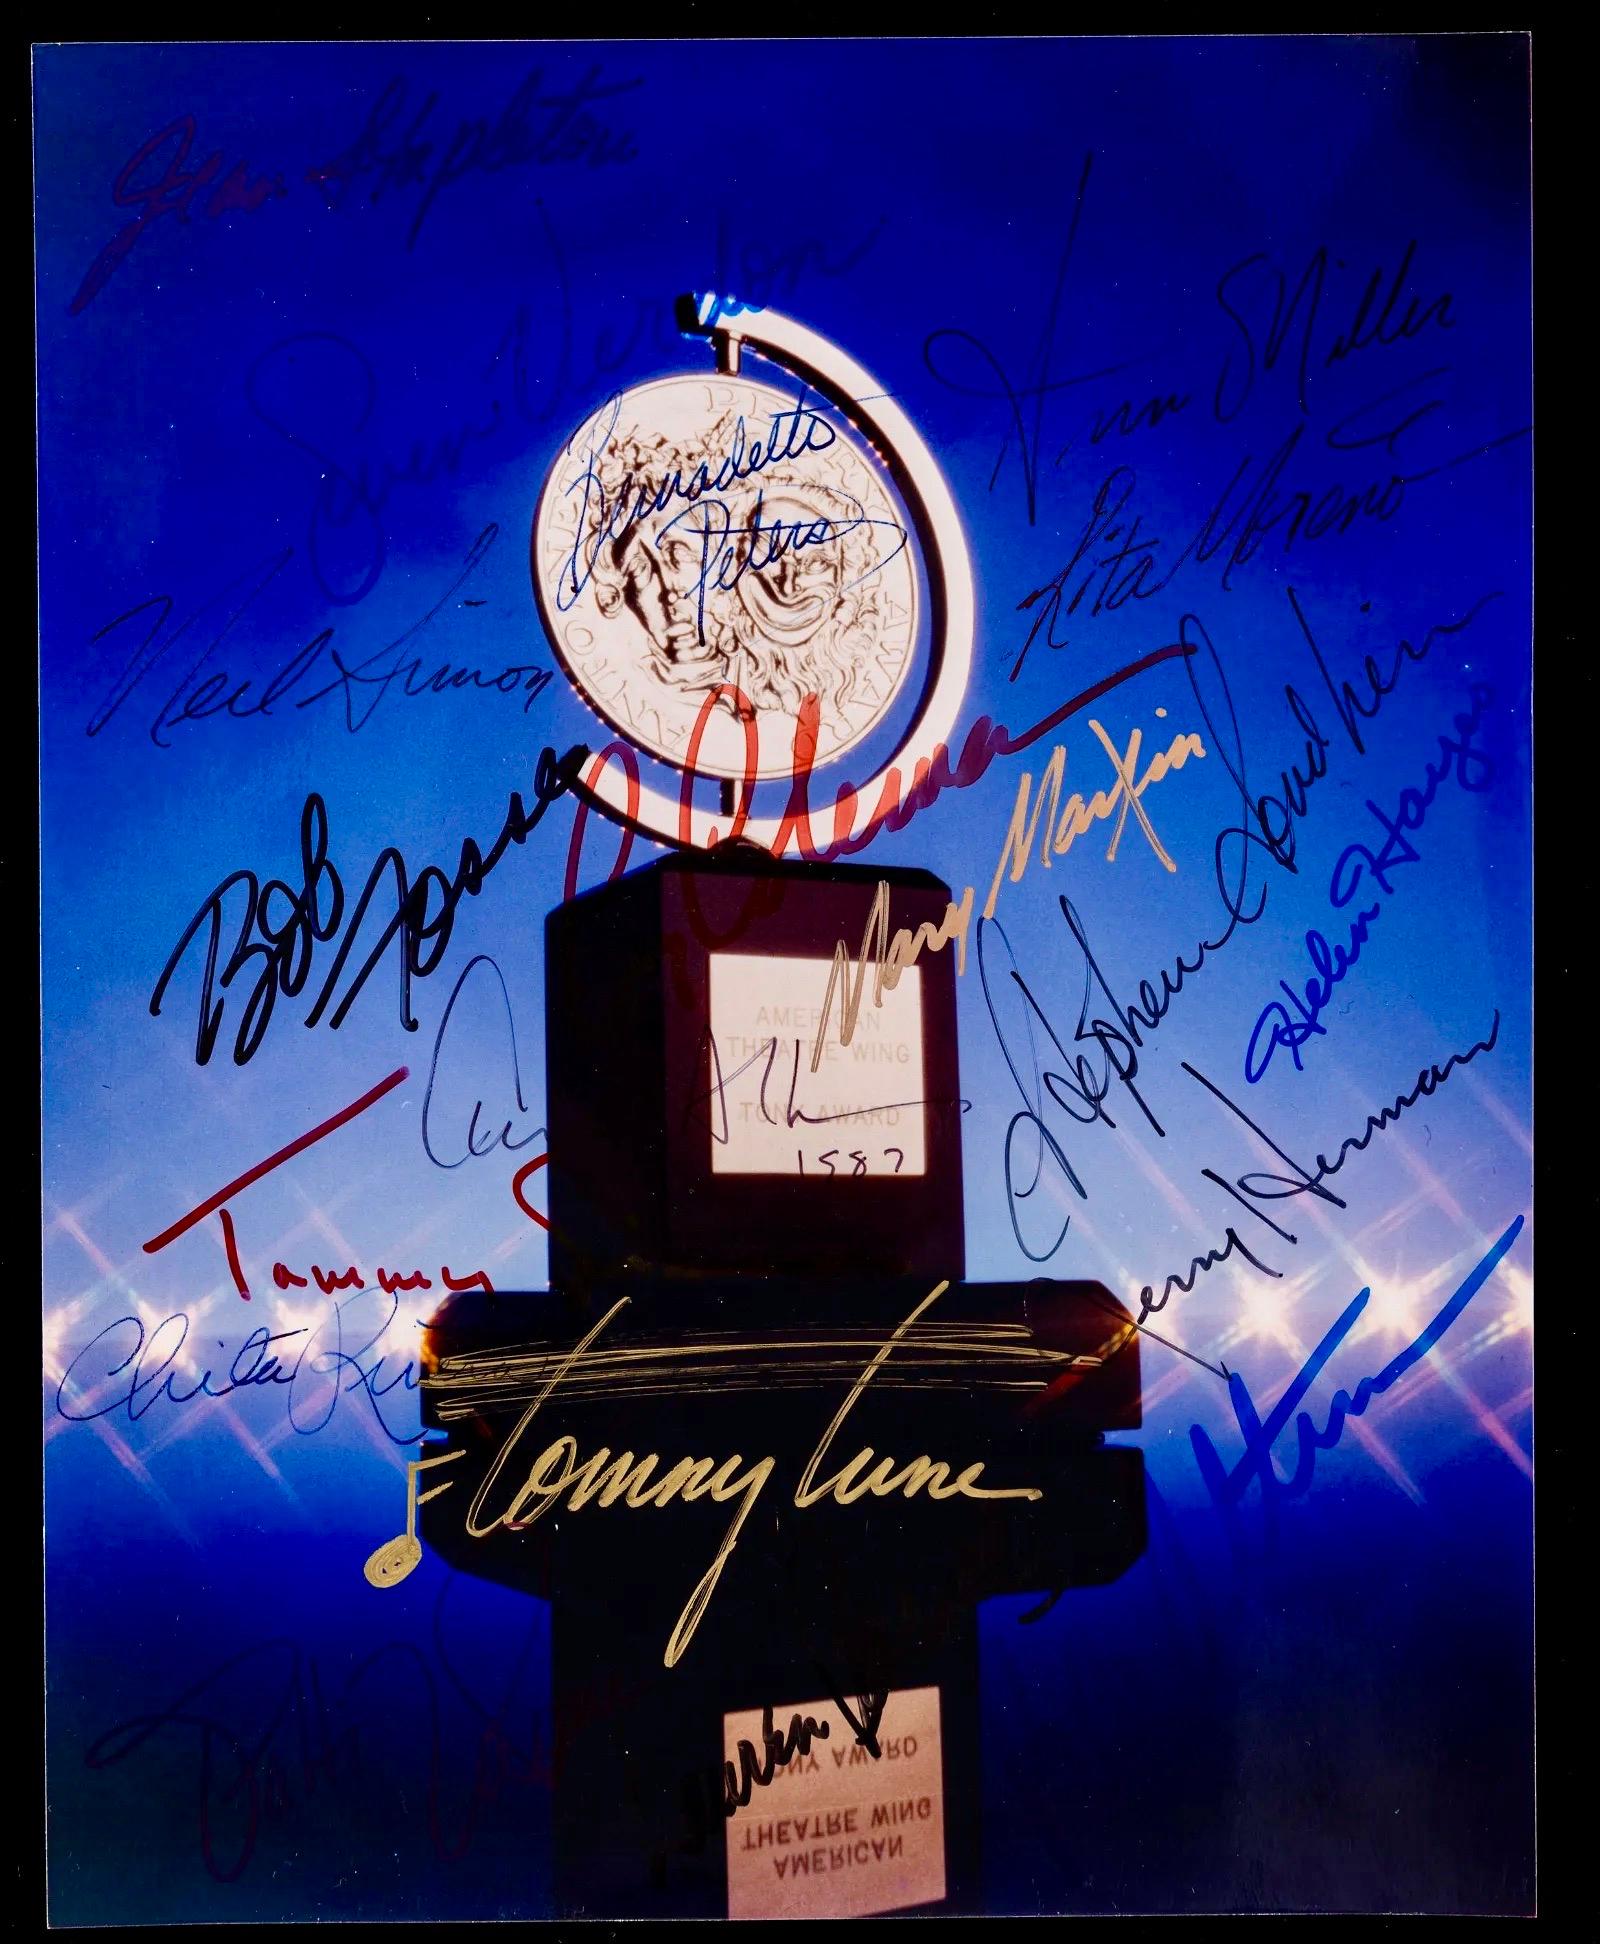 Photo signée 8x10 Photo Broadway Legends Sondheim Fosse Verdon Simon, 1987 Tonys Awards - Photograph de Tony Awards